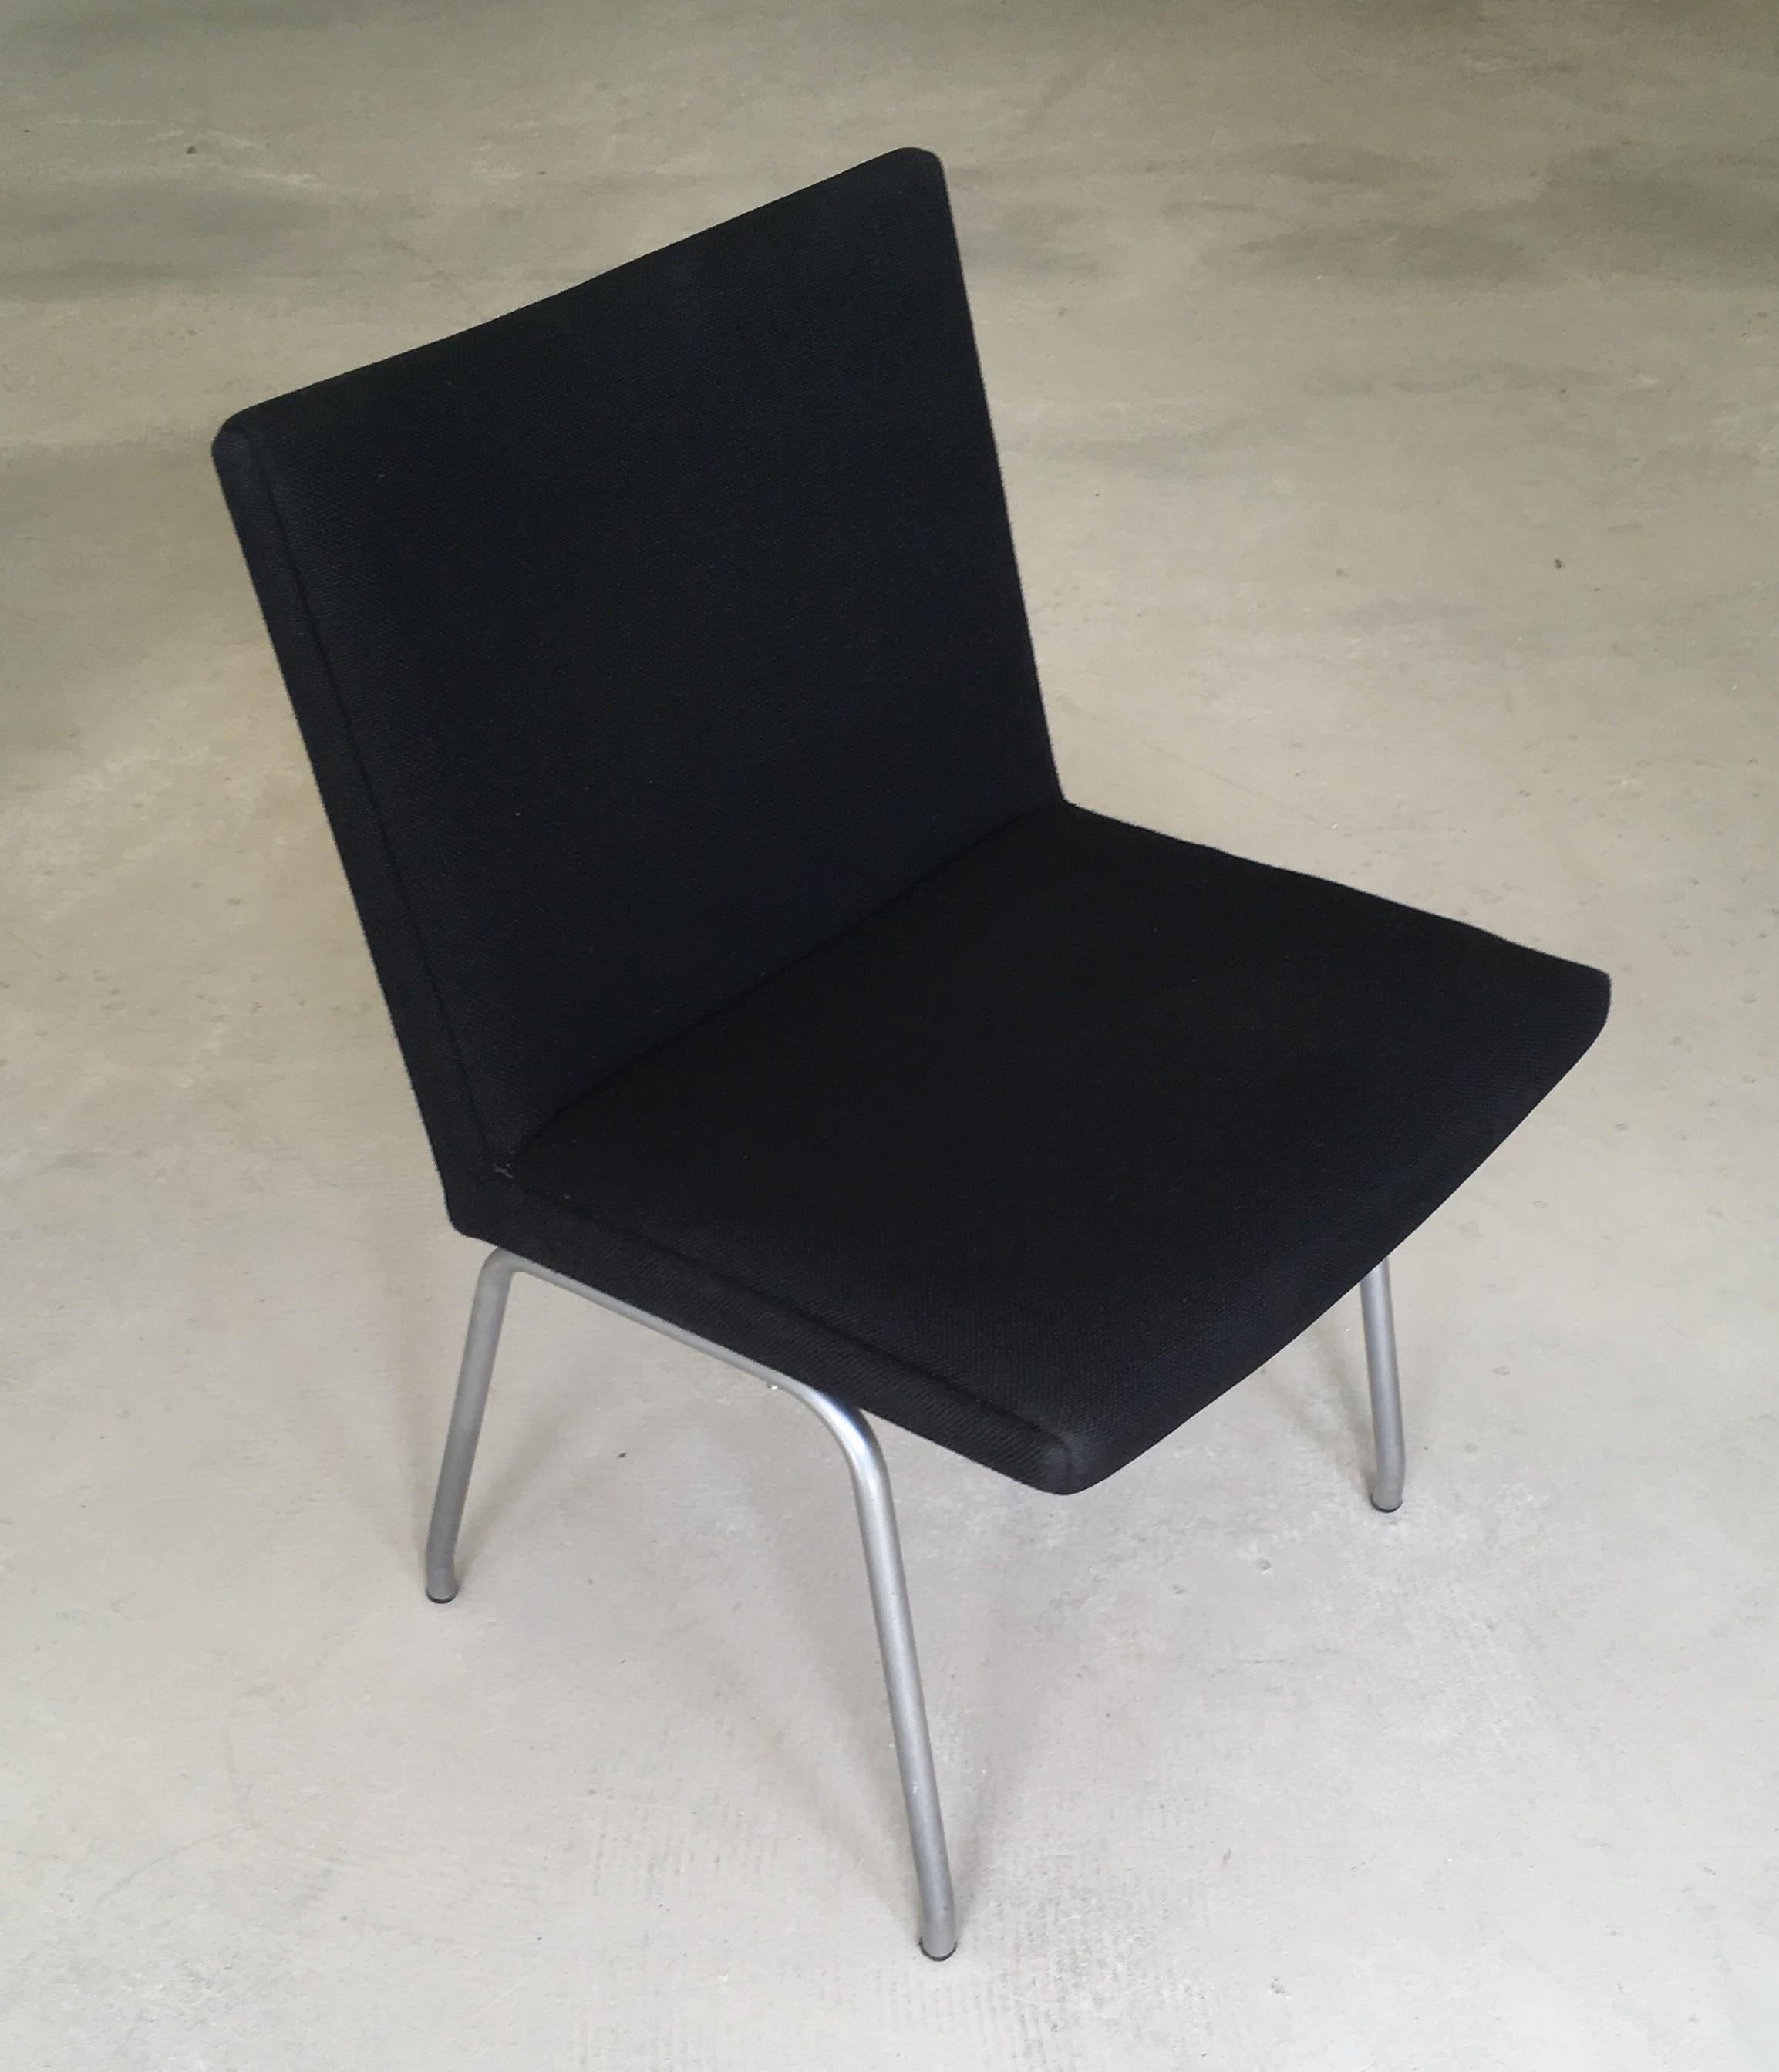 1960s Danish Hans J. Wegner Airport Chair Reupholstered in Black Fabric For Sale 2